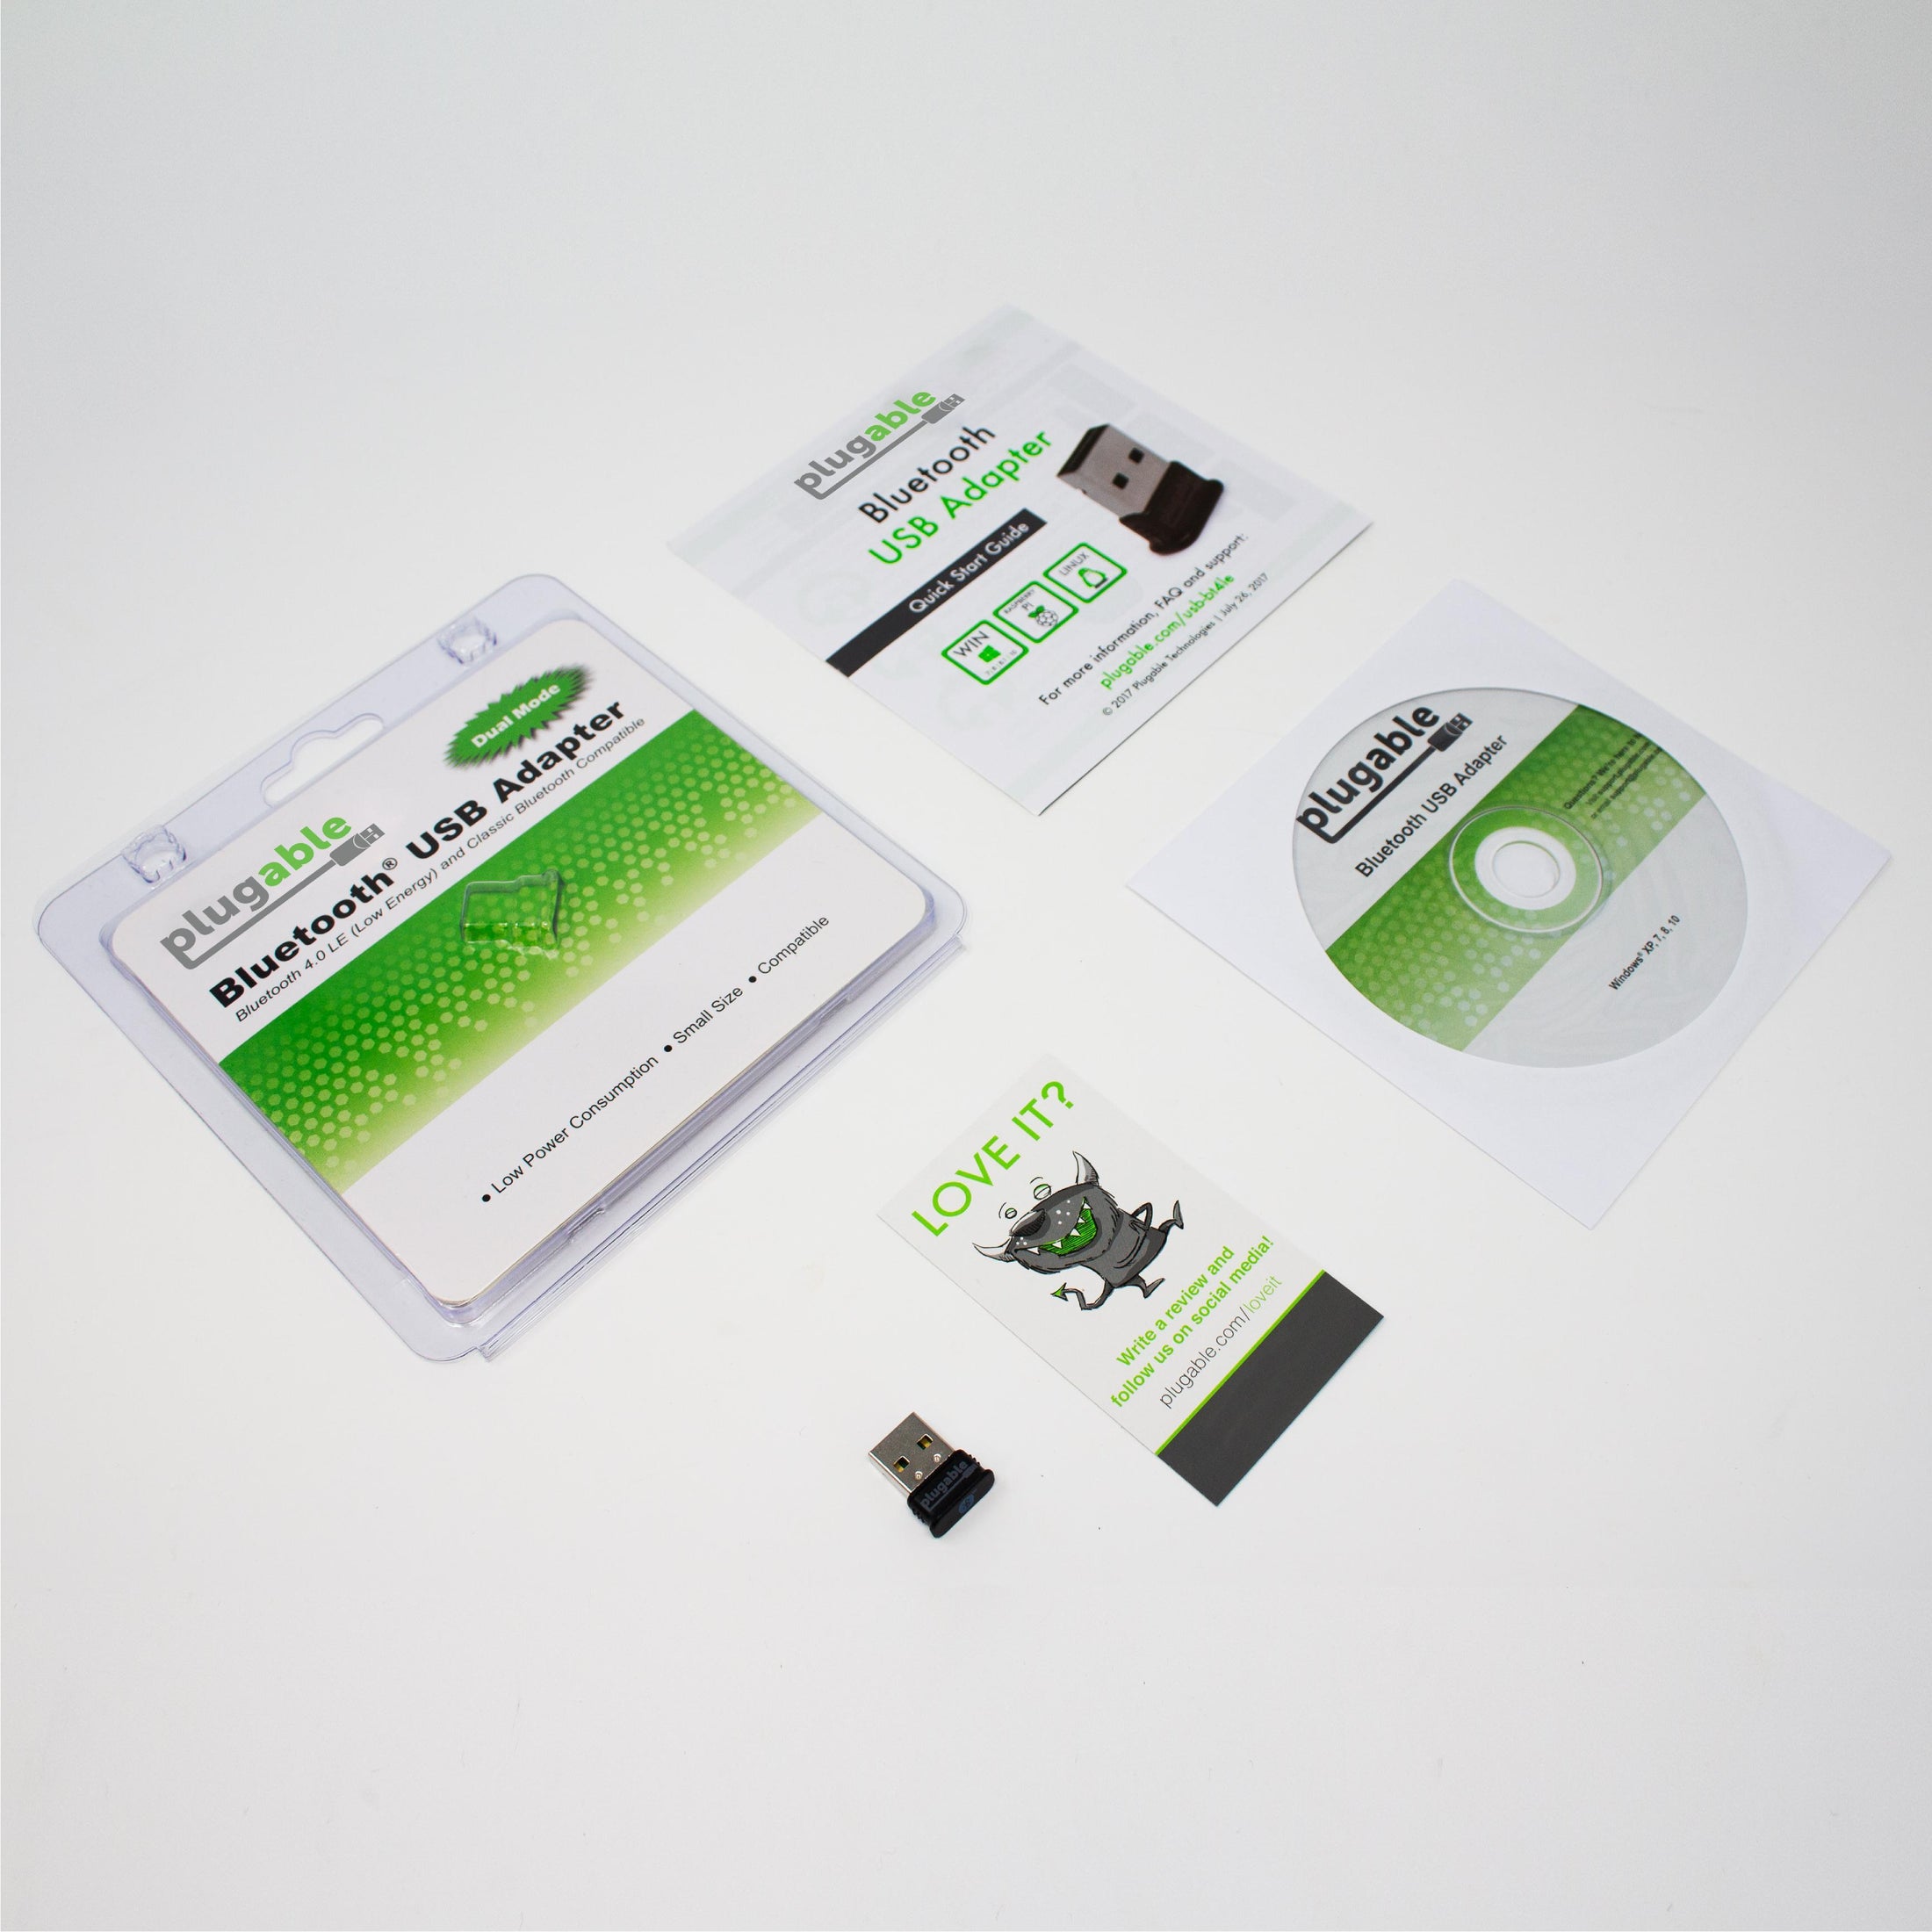 Plugable USB 2.0 Bluetooth® Adapter – Plugable Technologies